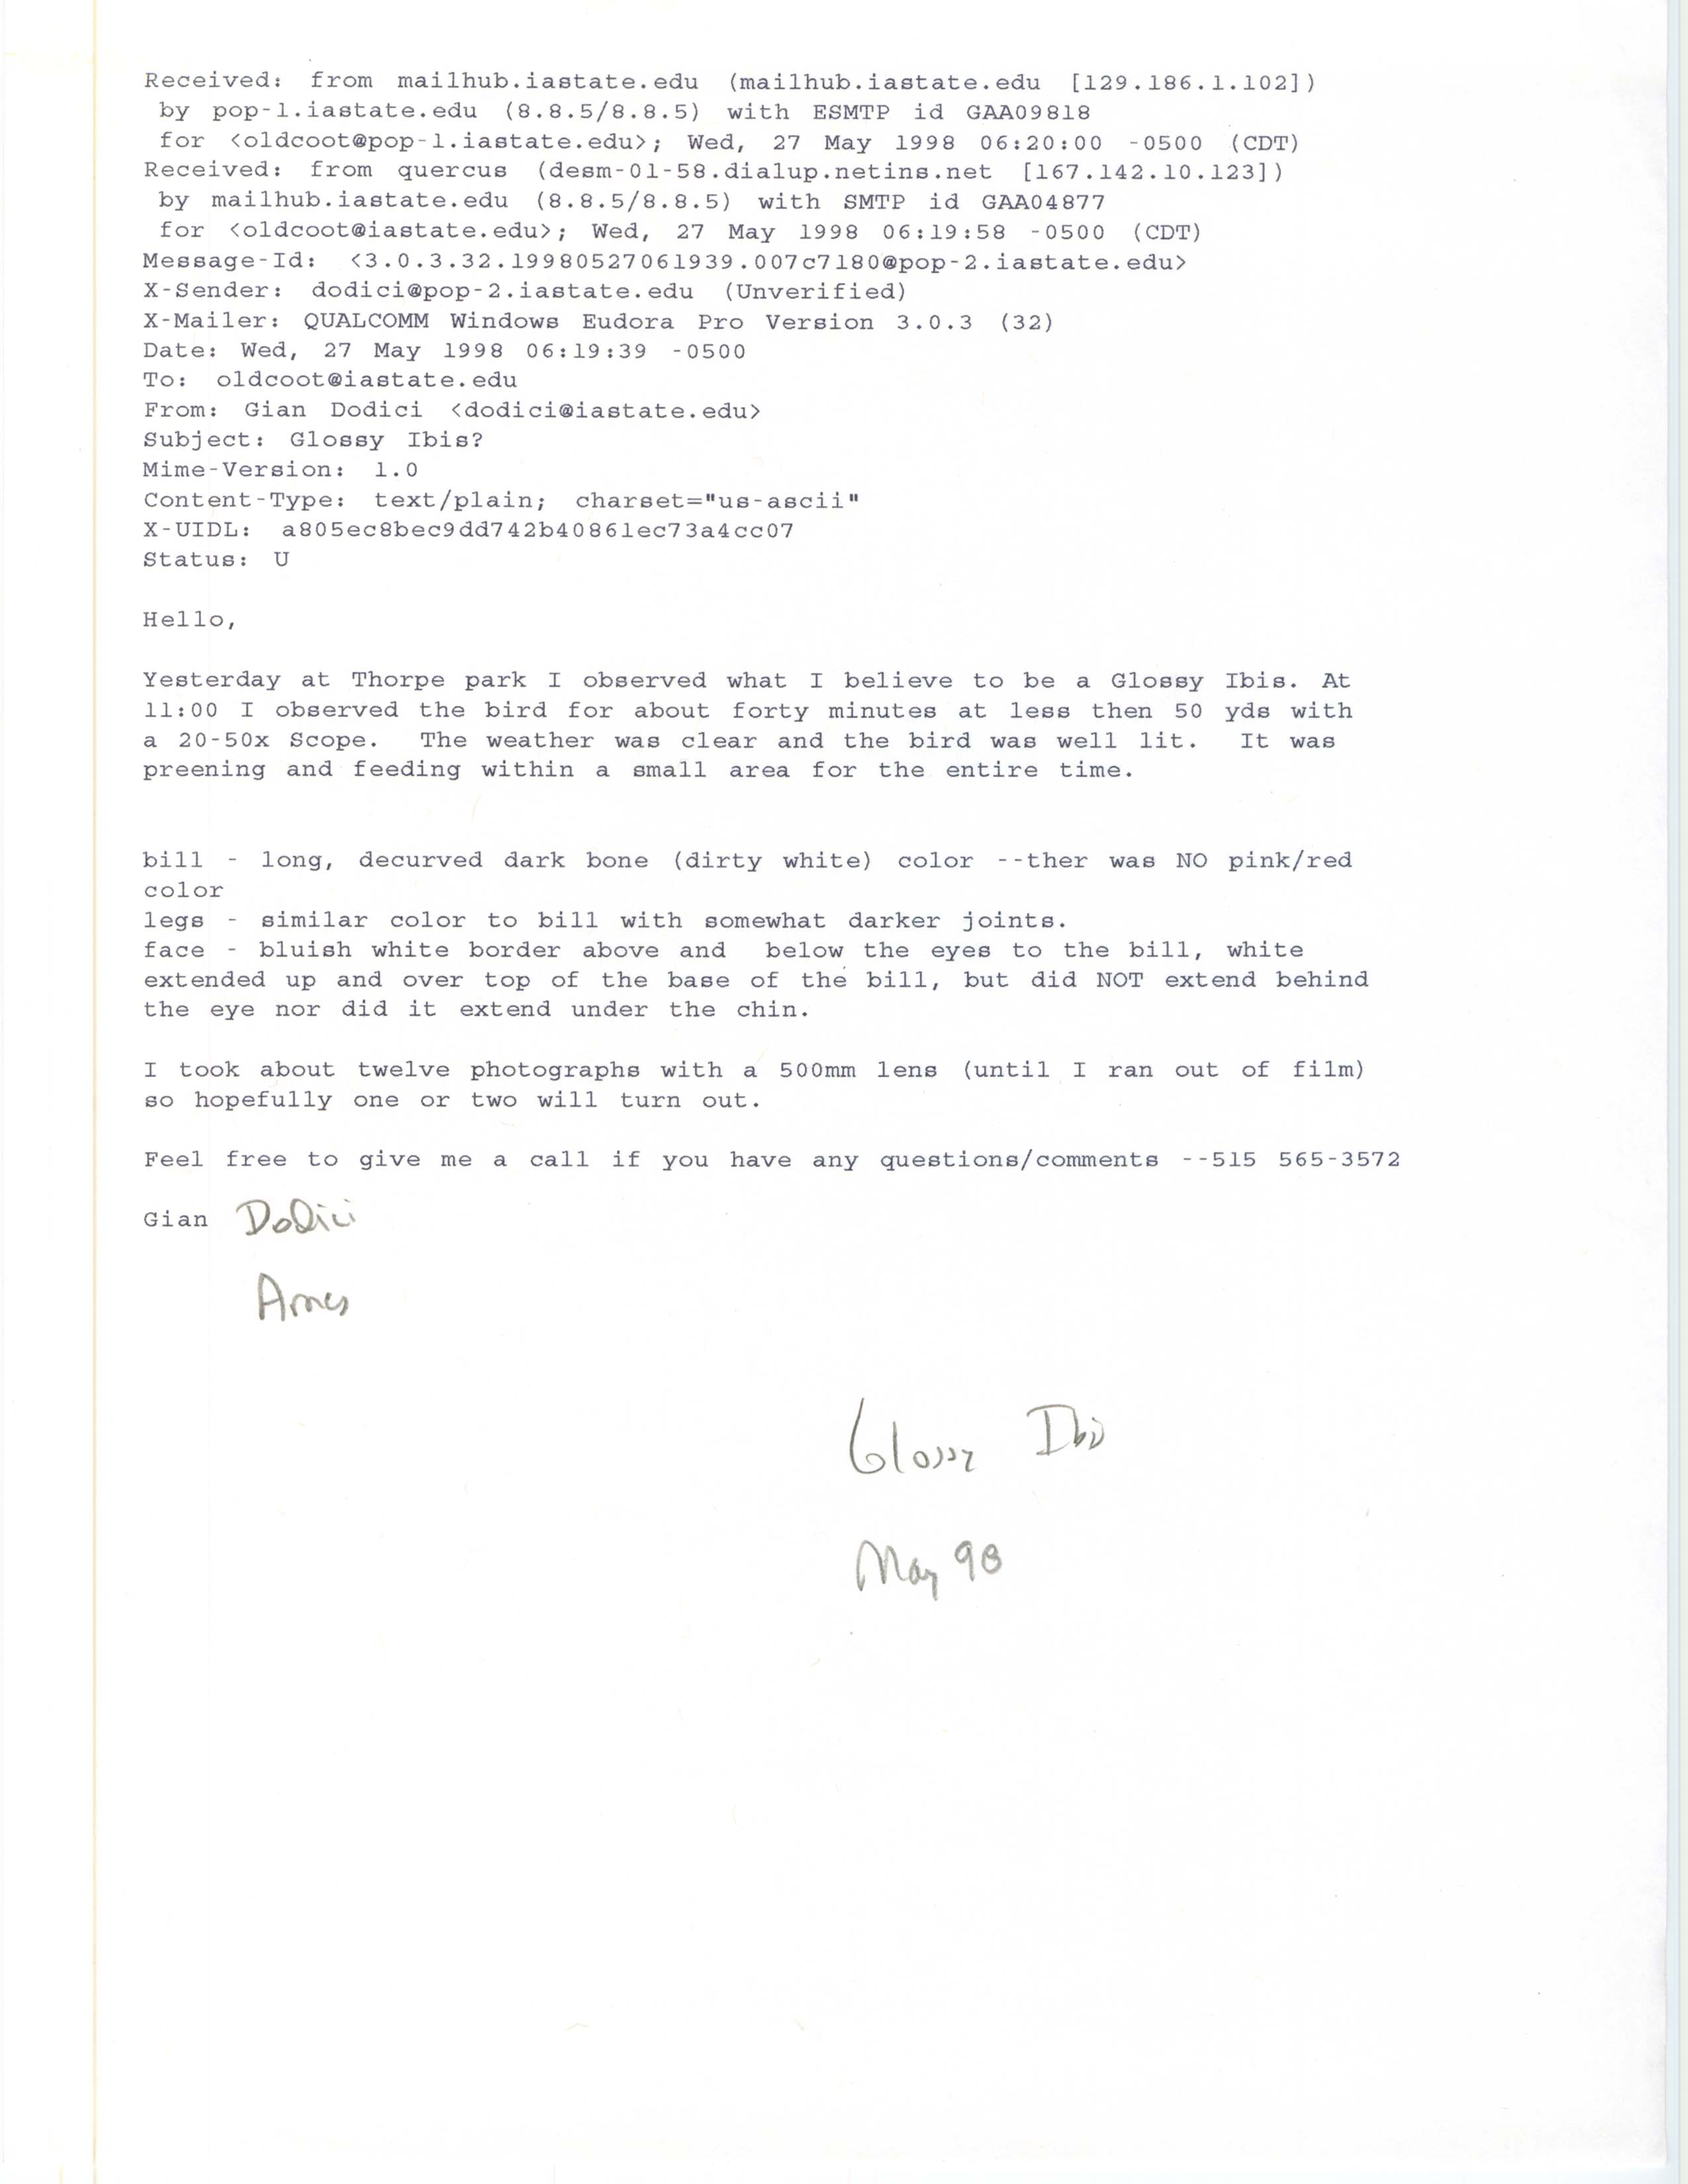 Gian Dodici email to Jim Dinsmore regarding Glossy Ibis sighting, May 27, 1998